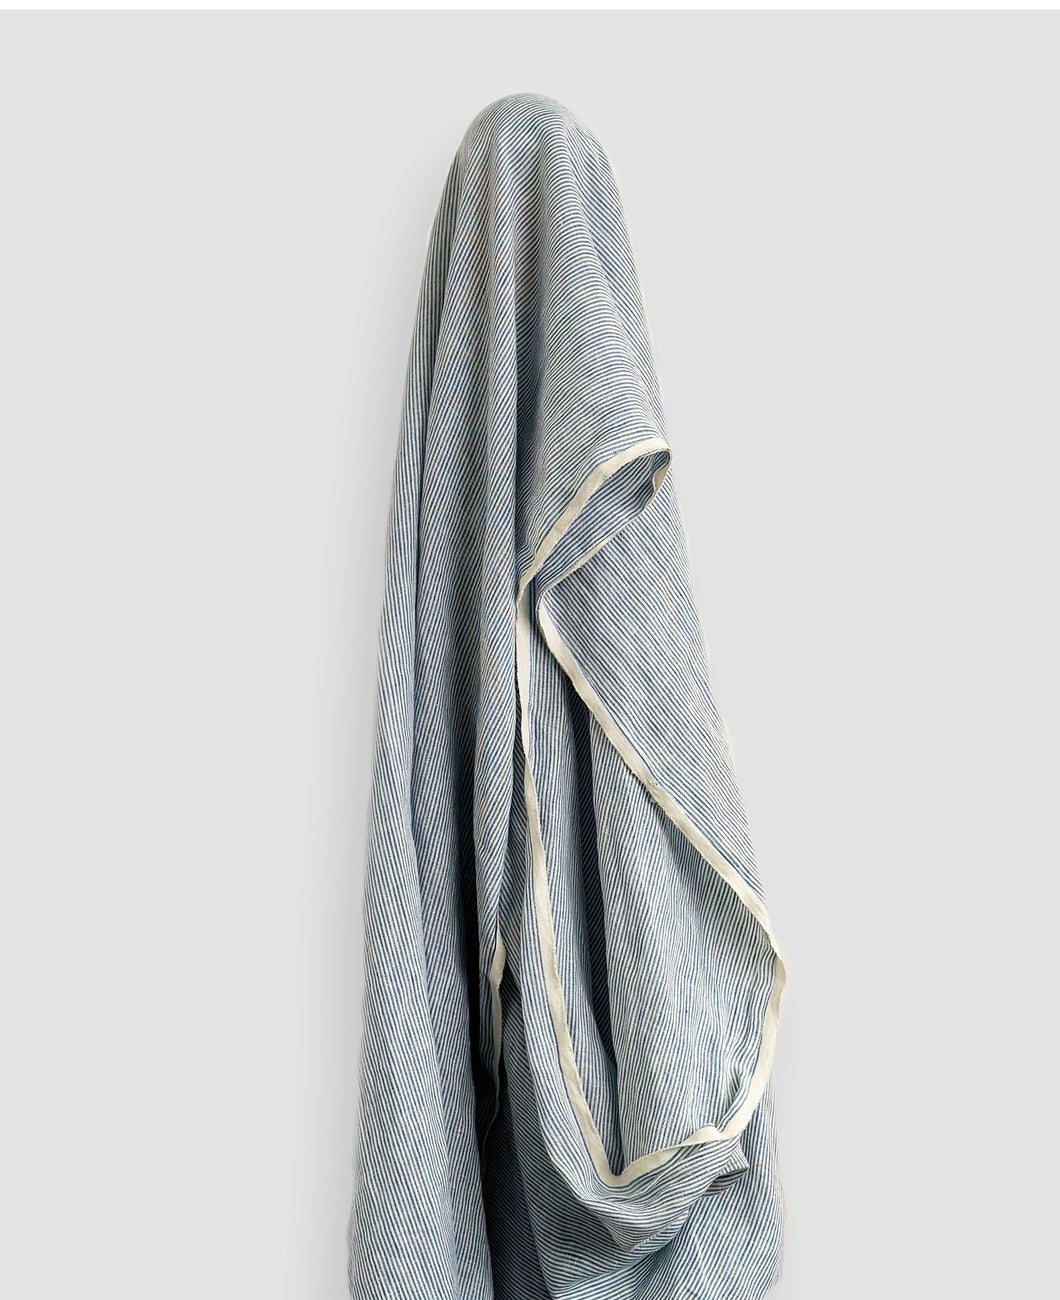 Chambray Off White Stripe 100% Linen Vintage Finish 145gsm $42pm